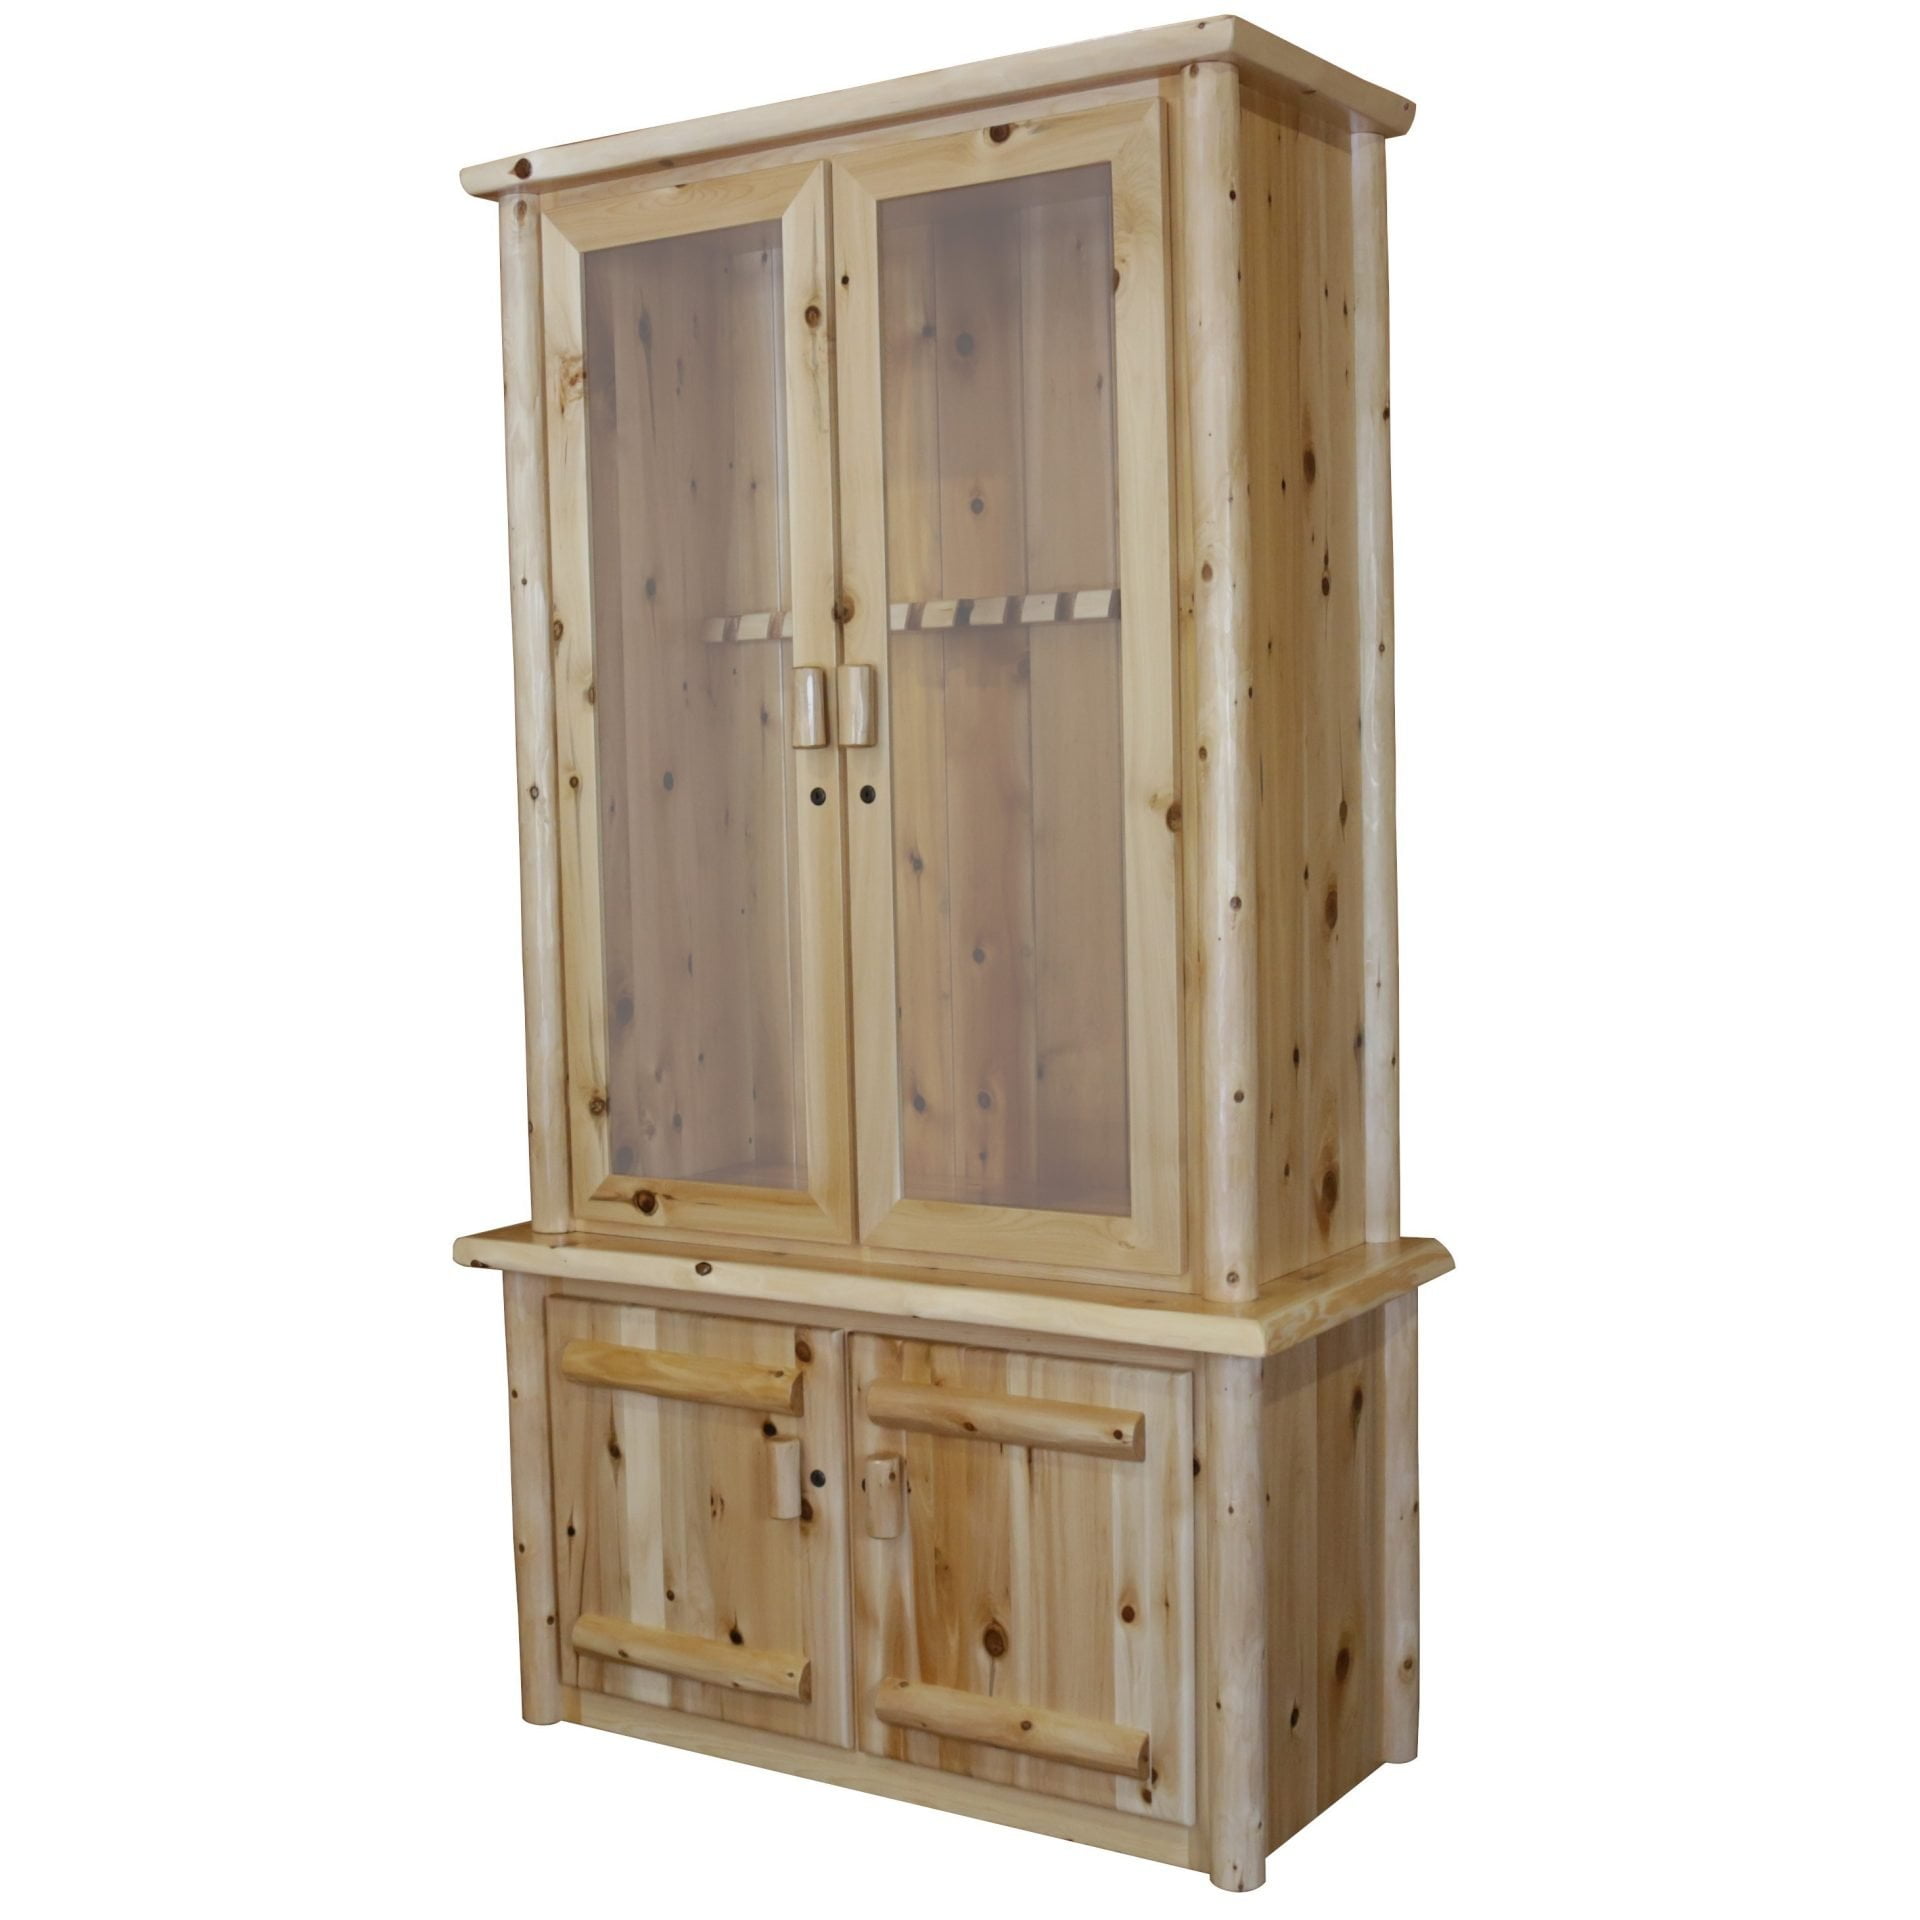 Rustic White Cedar Log Gun Cabinet With Locking Doors